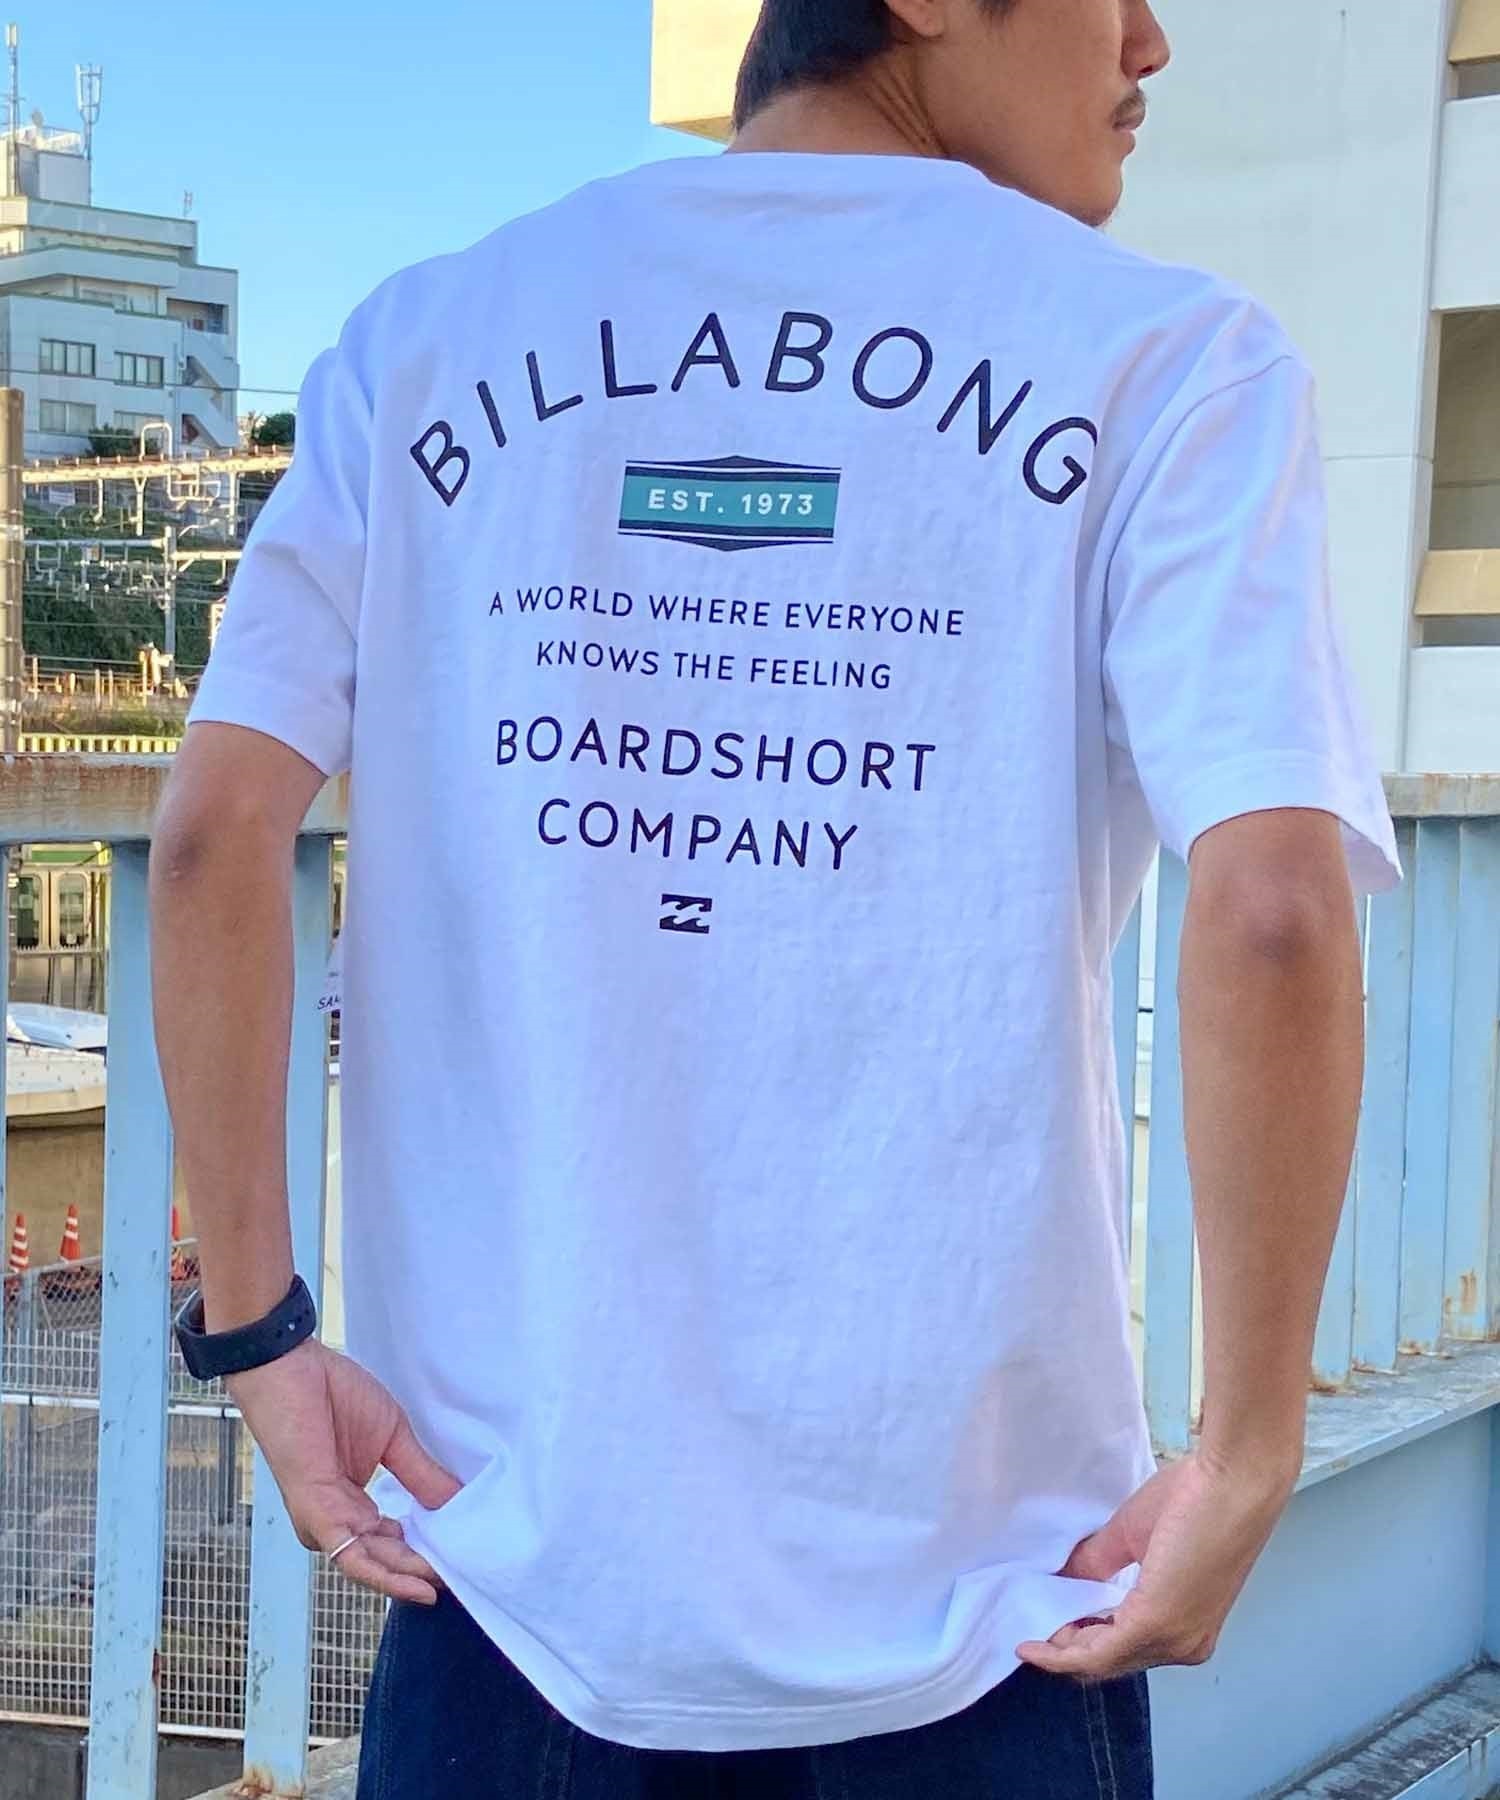 BILLABONG ビラボン PEAK Tシャツ 半袖 メンズ バックプリント クルーネック BE011-205(SAG-S)